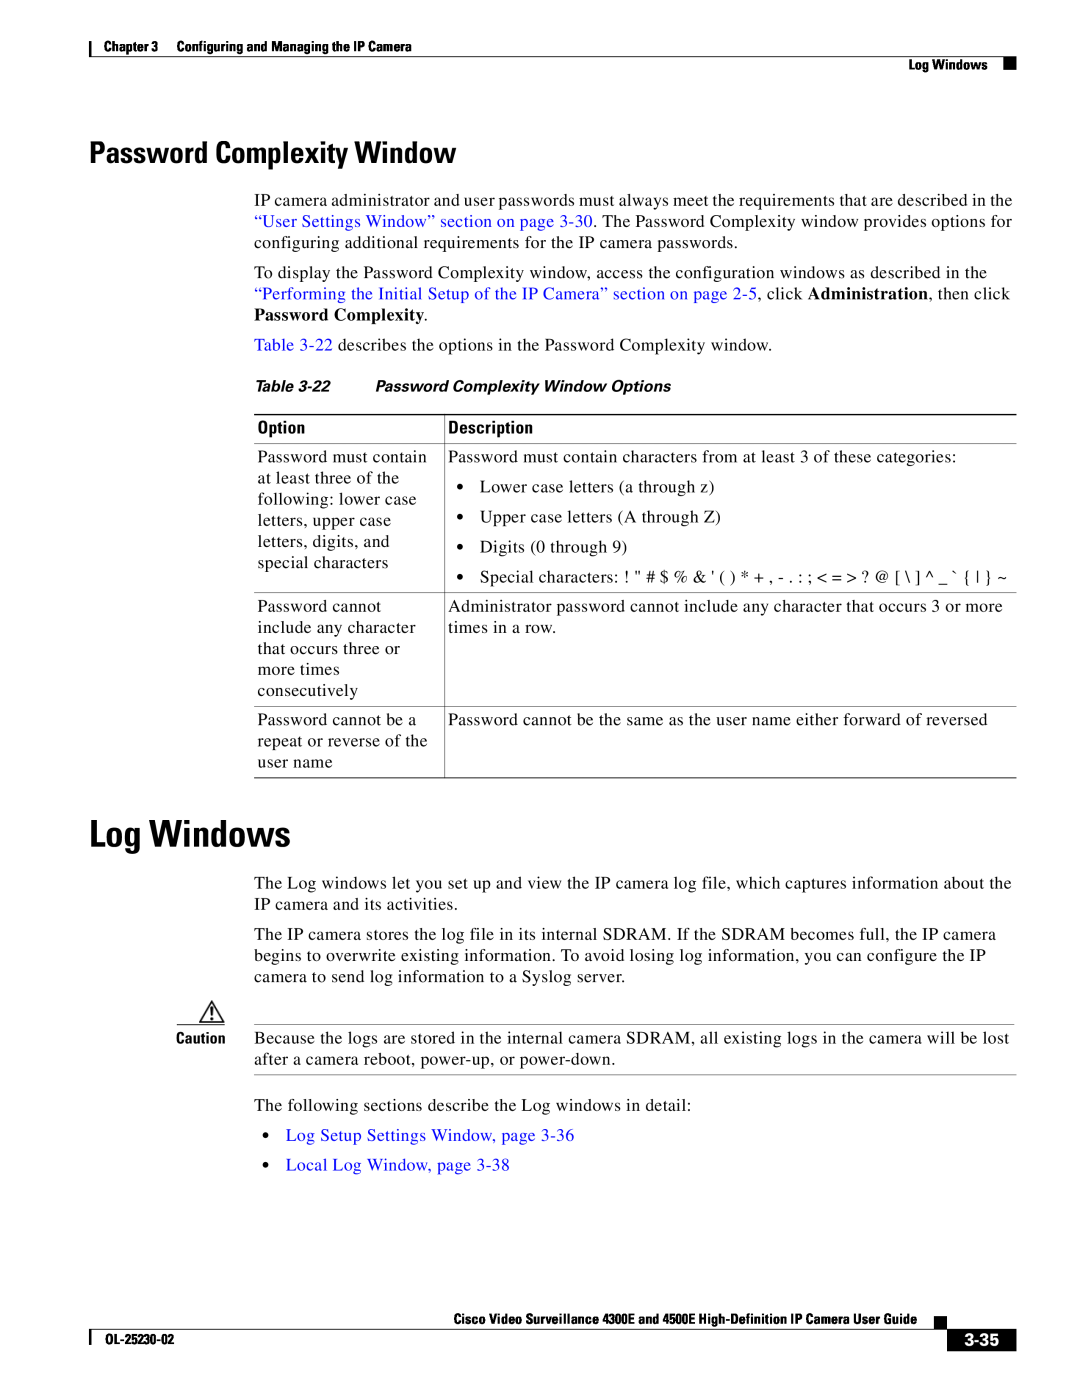 Cisco Systems 4300E Log Windows, Password Complexity Window, Log Setup Settings Window, page, Local Log Window, page, 3-35 